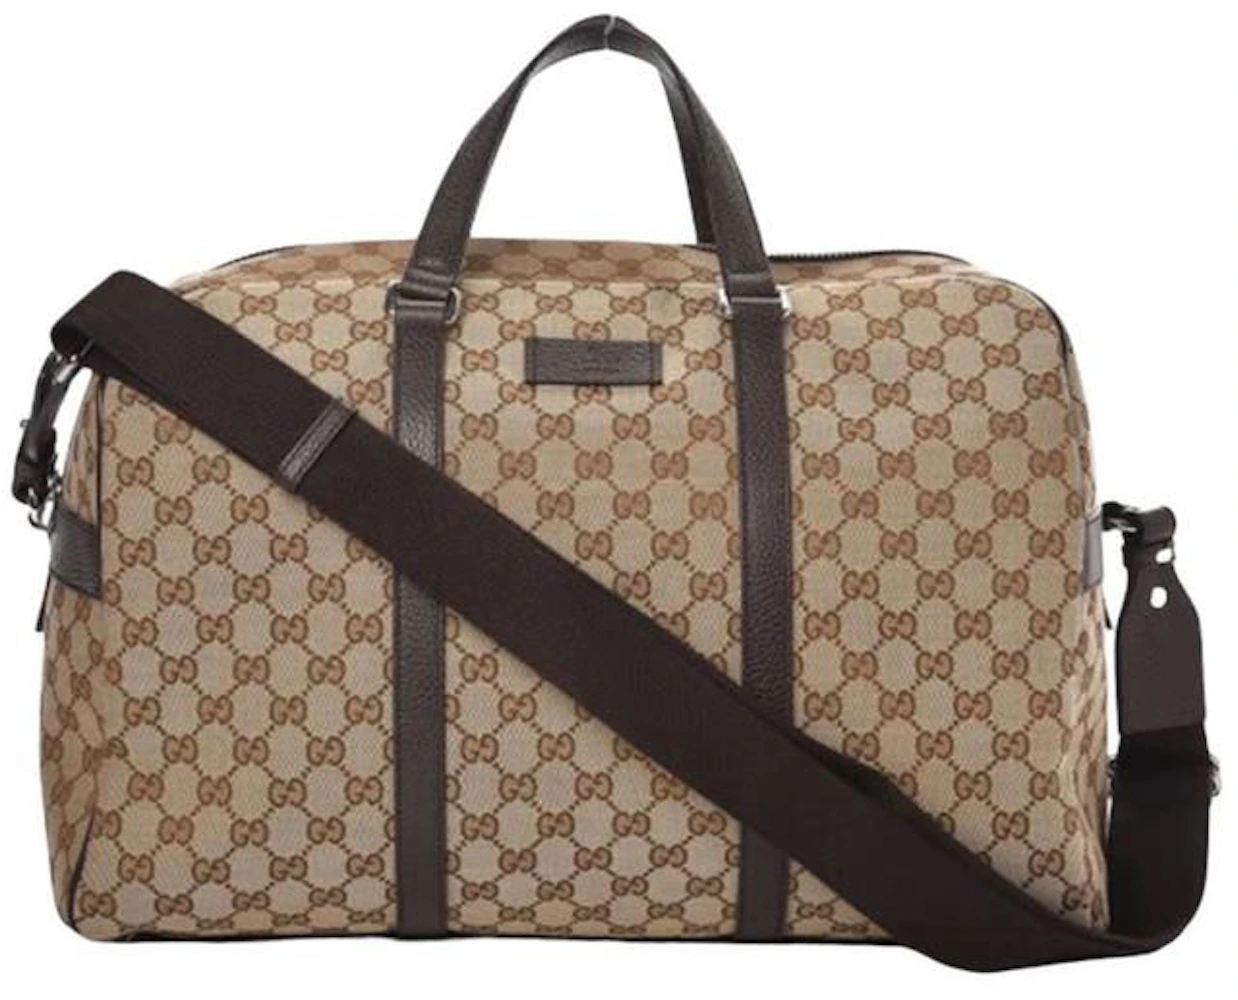 Large Gg Embossed Travel Bag In Brown